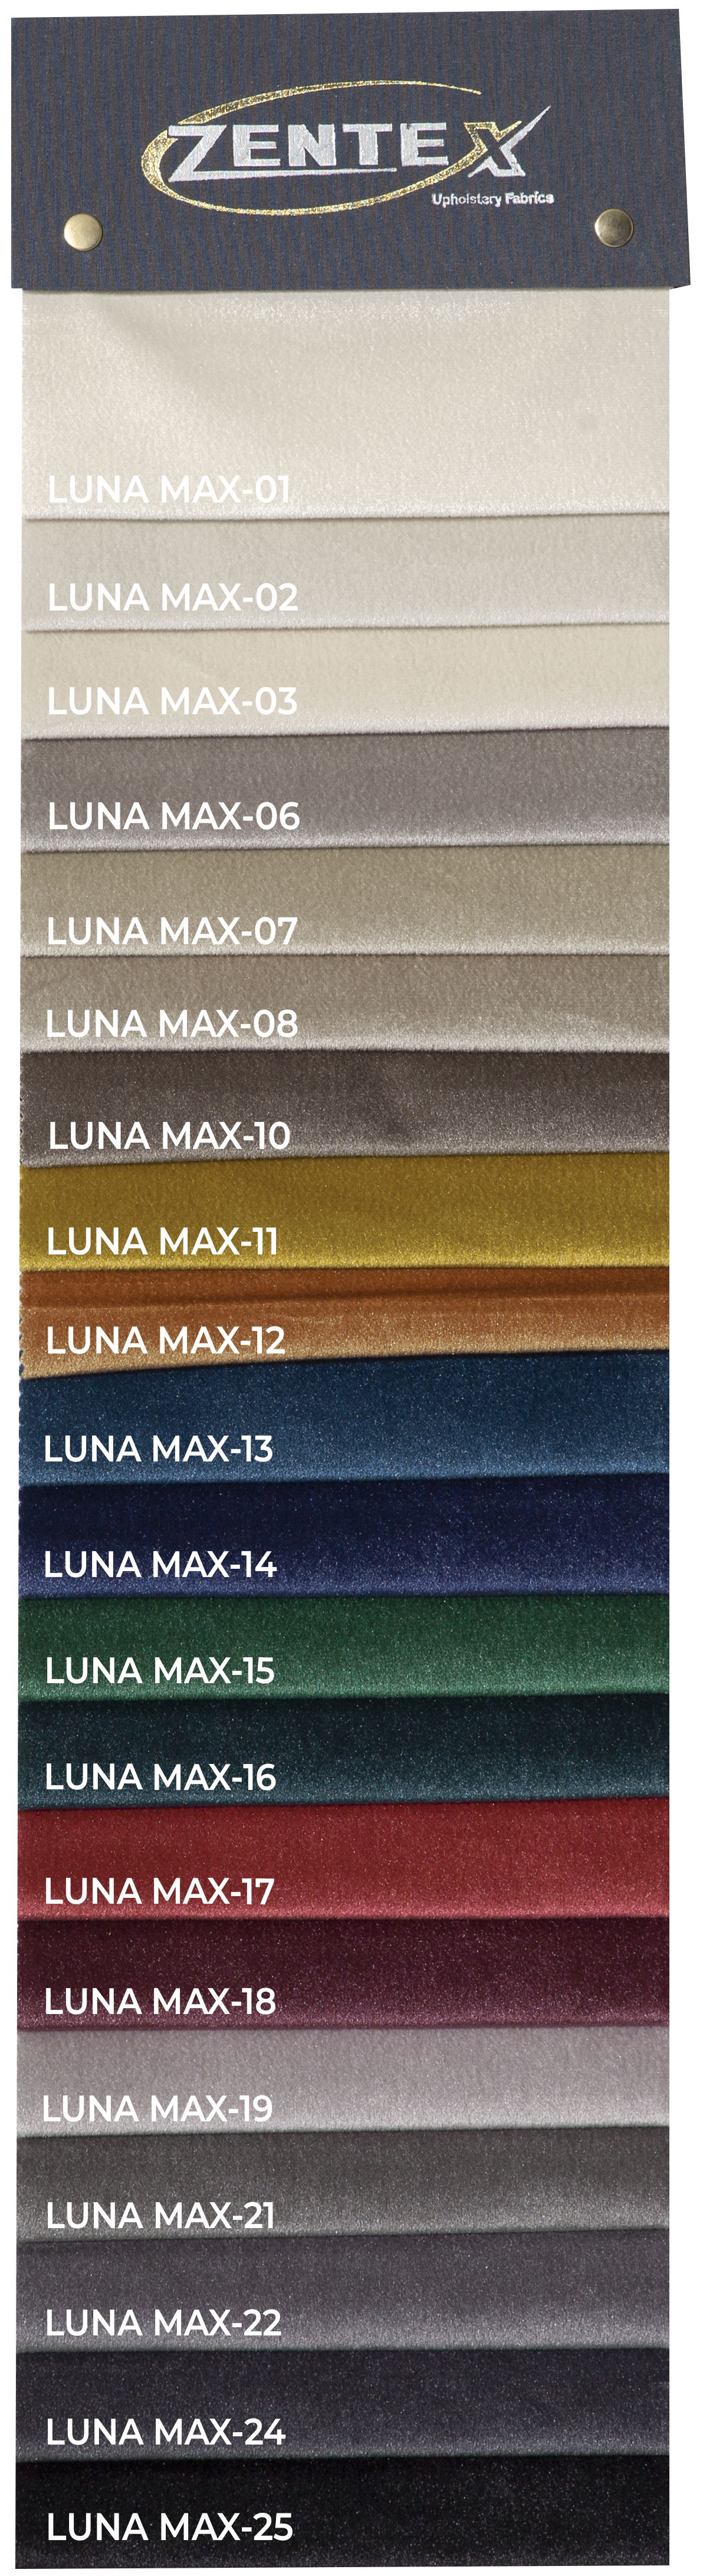 Zentks Luna Max ..jpg (3.58 MB)